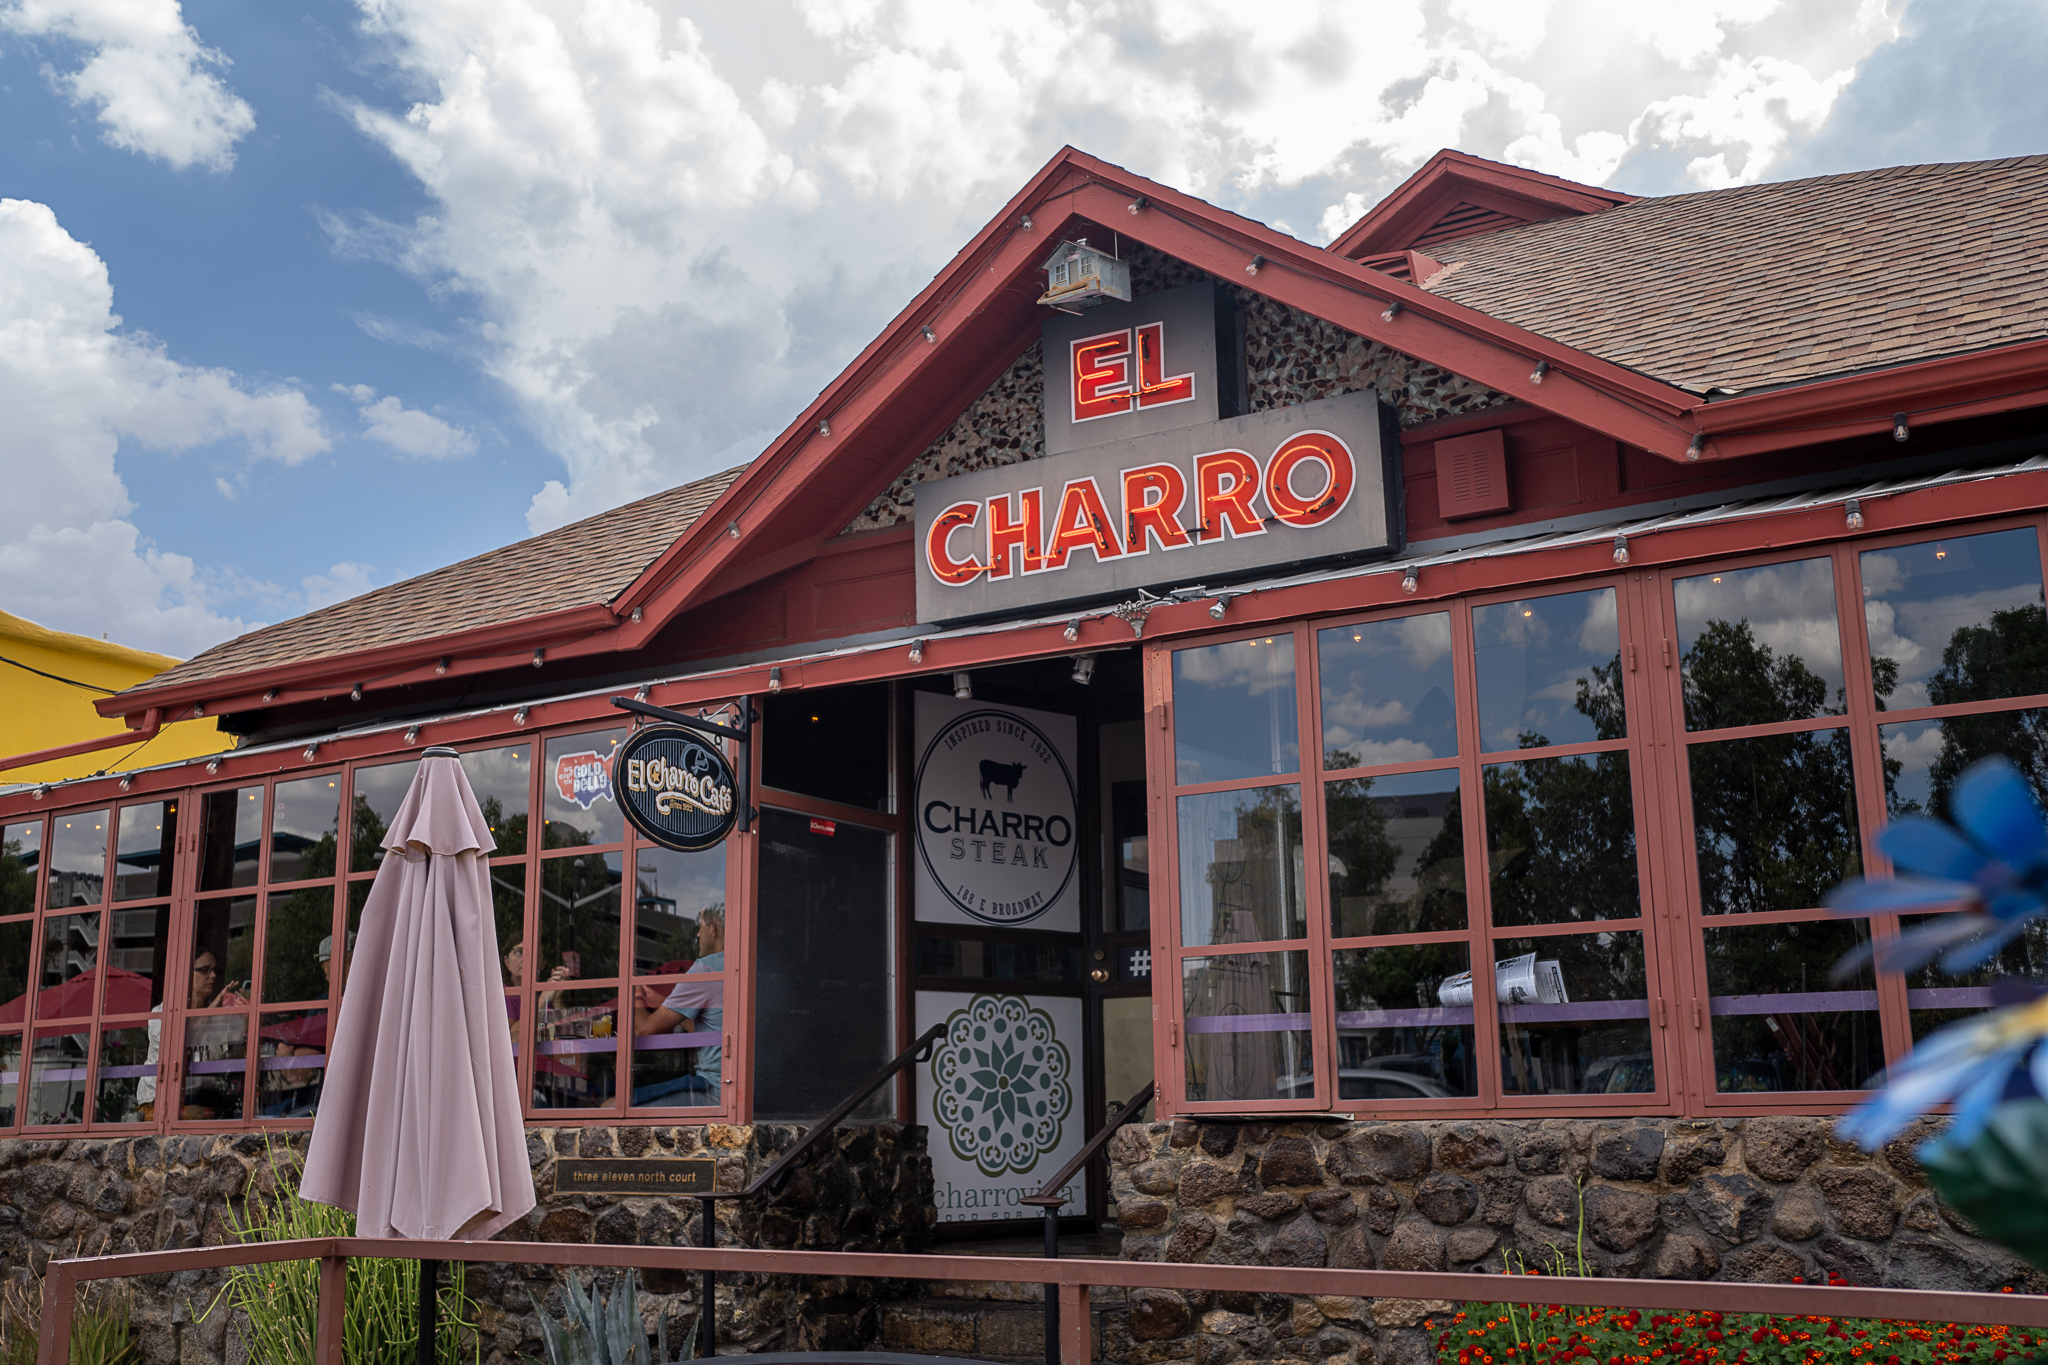 El Charro Café